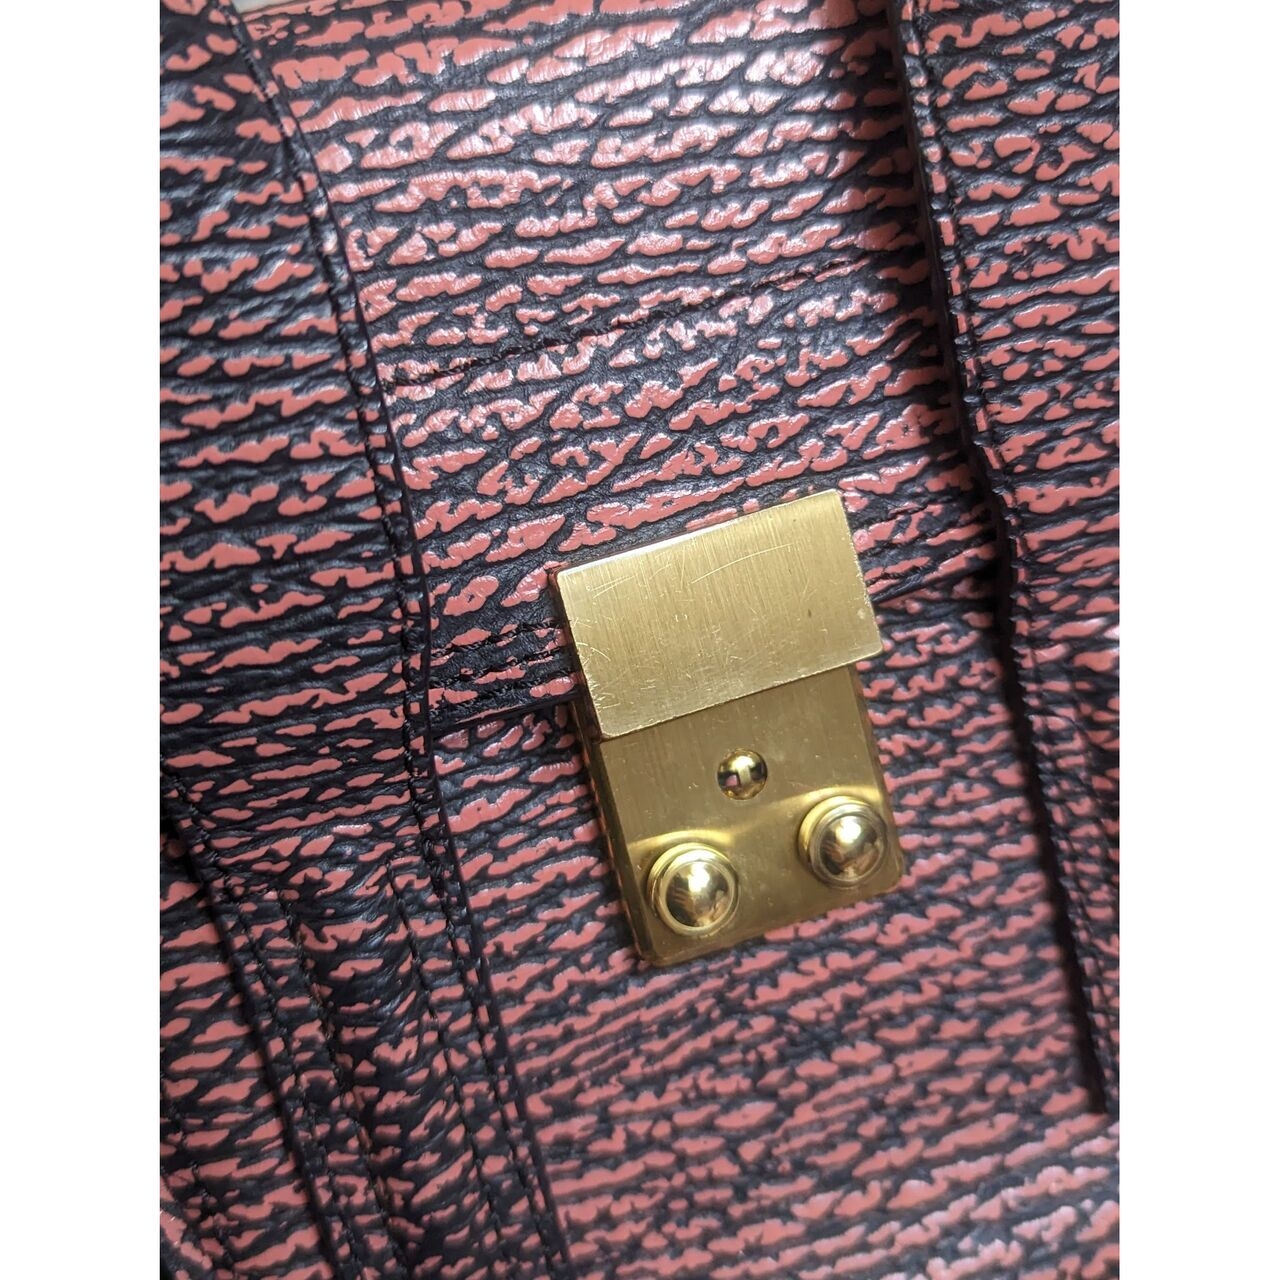 3.1 Phillip Lim Mini Pashli Satchel Black Lava Handbag Gold Hardware